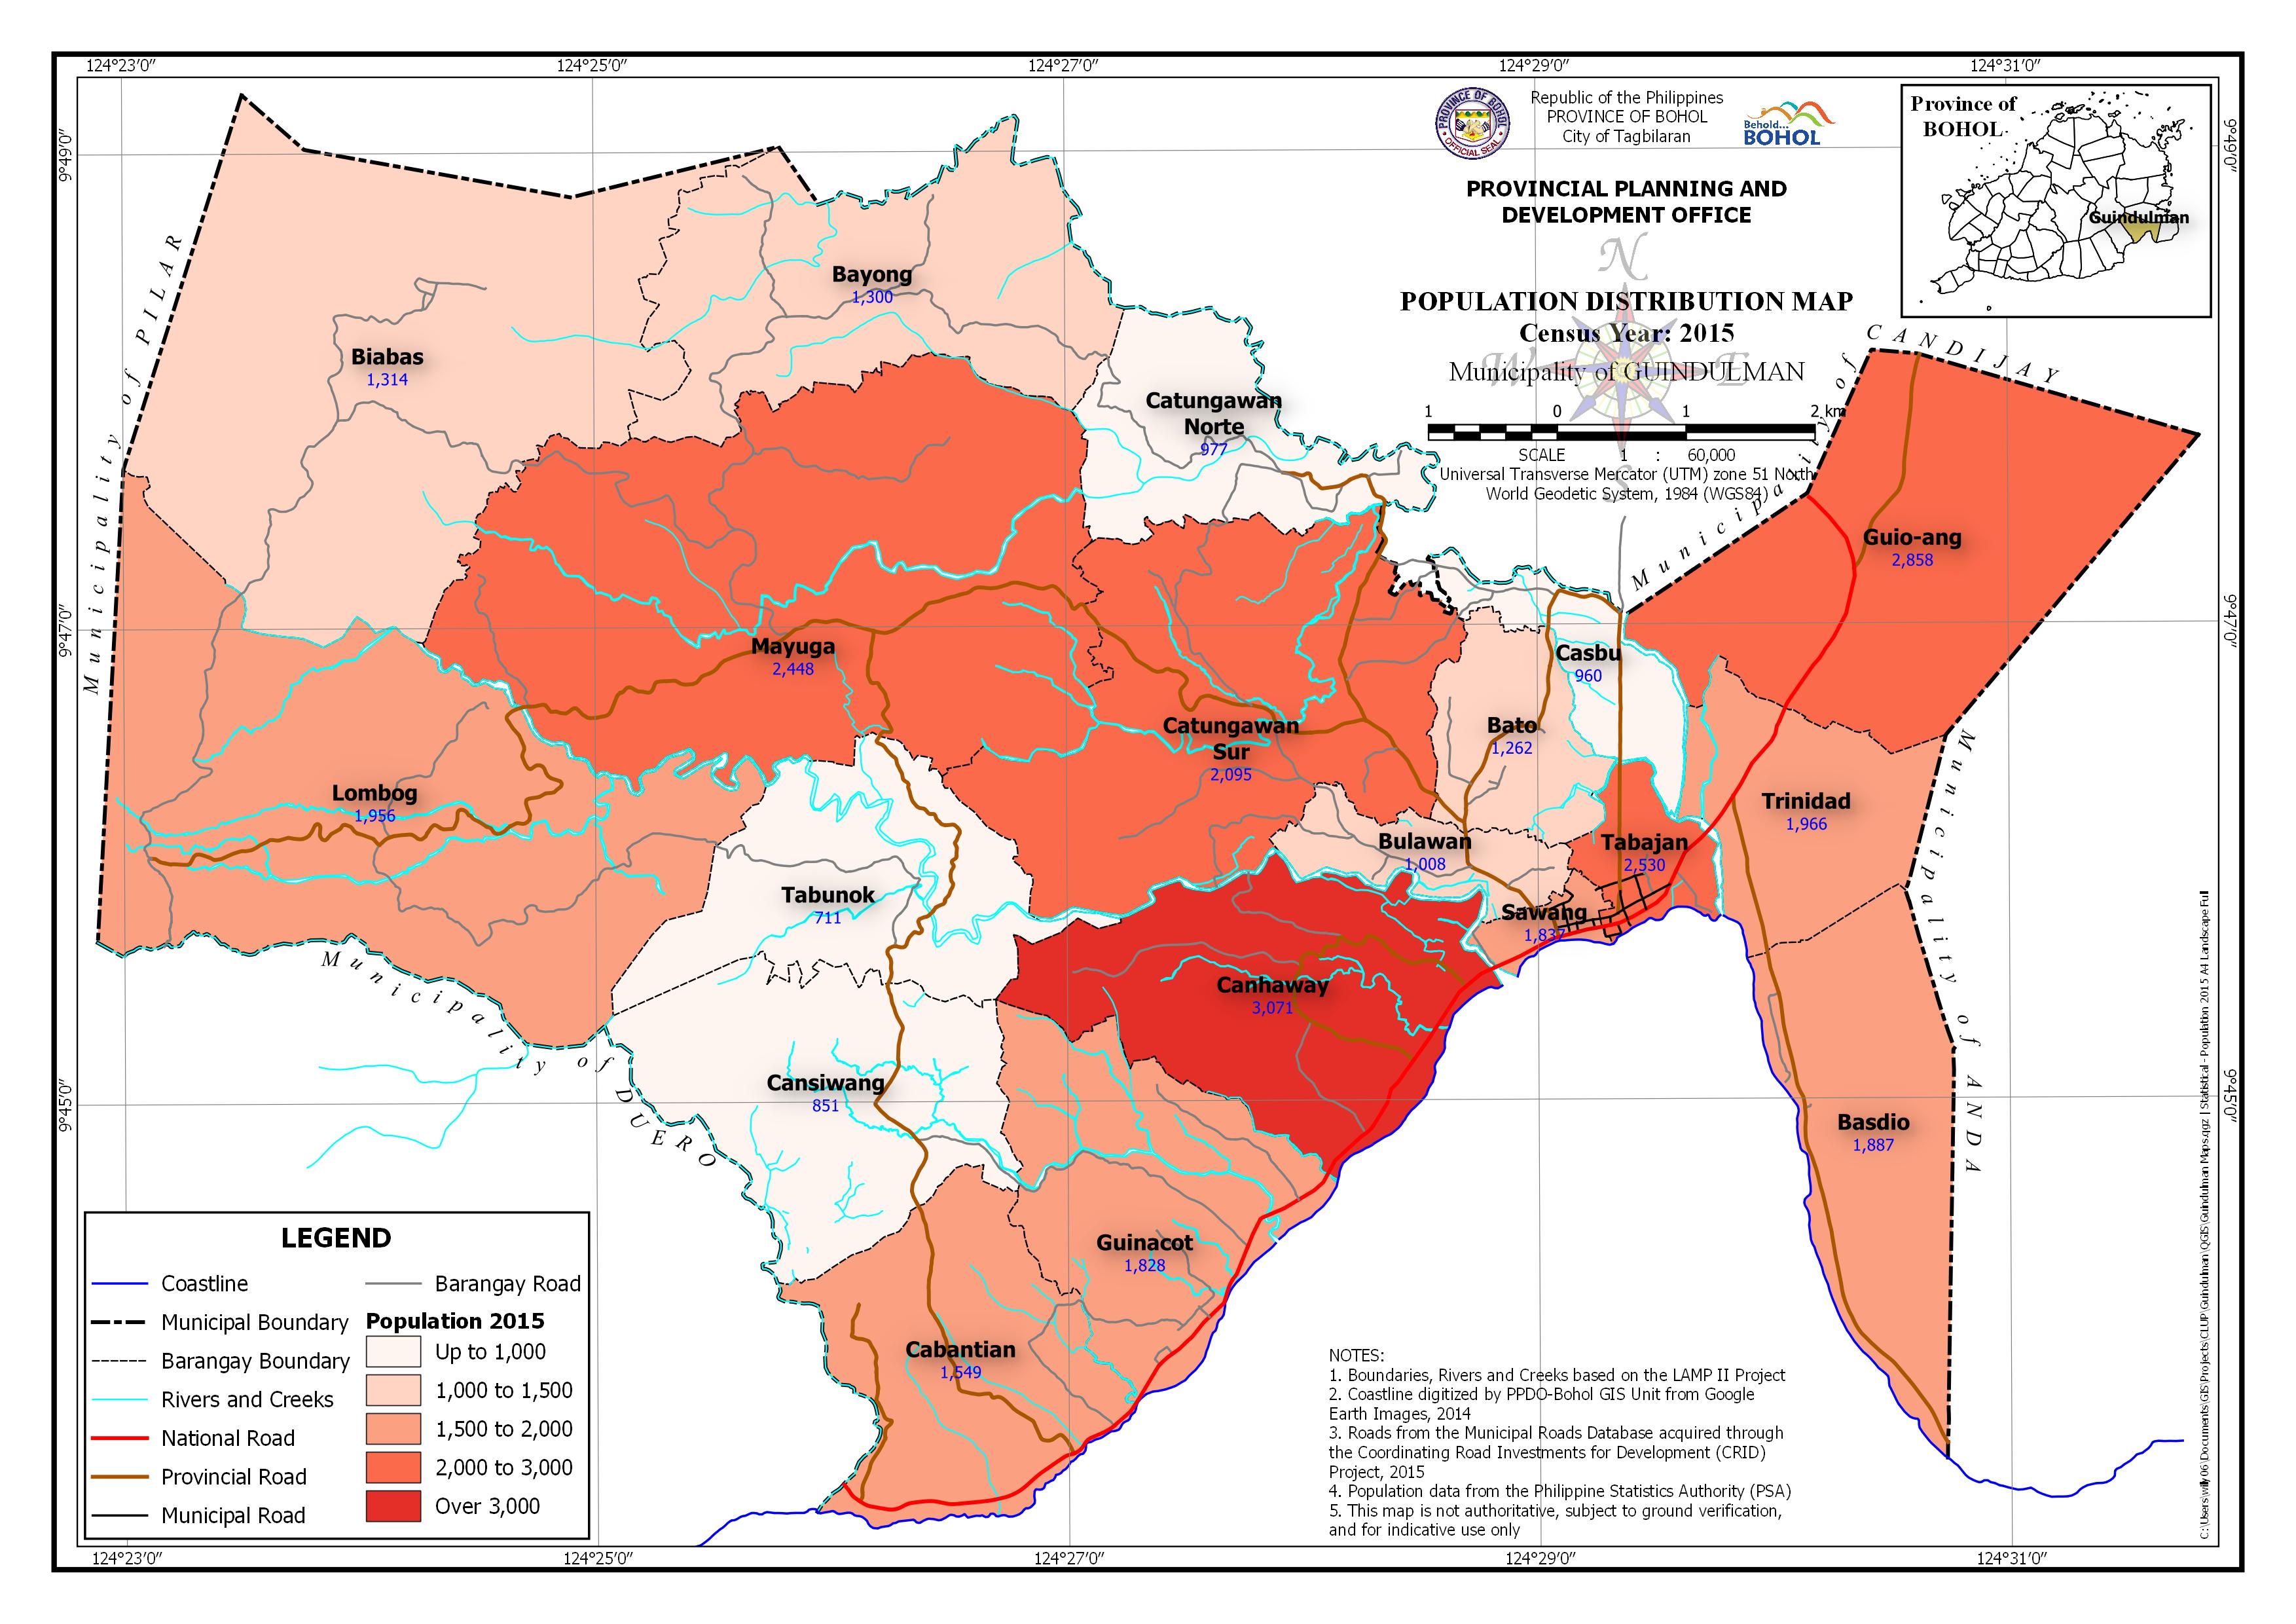 Population Distribution Census Year: 2015